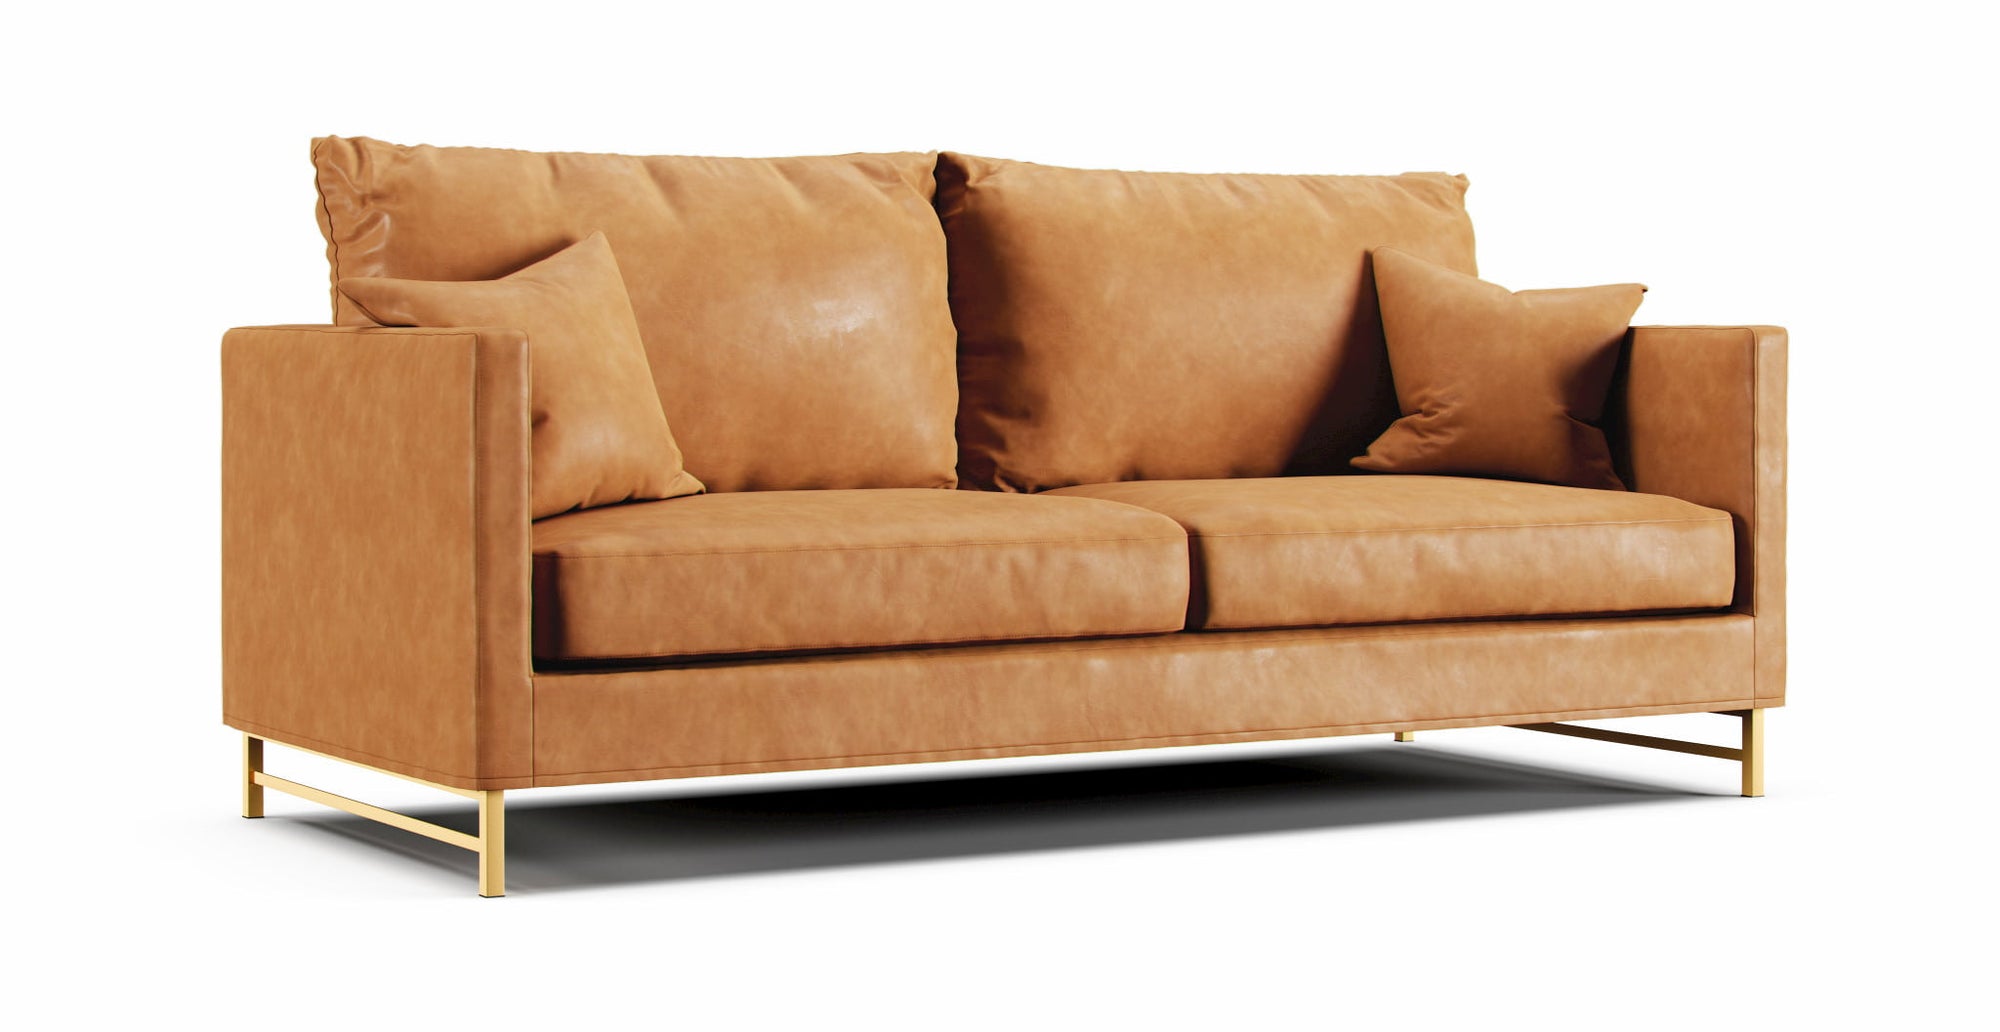 Smooth light brown synthetic leather Savannah Saddle slipcover on Arhaus Hayden sofa